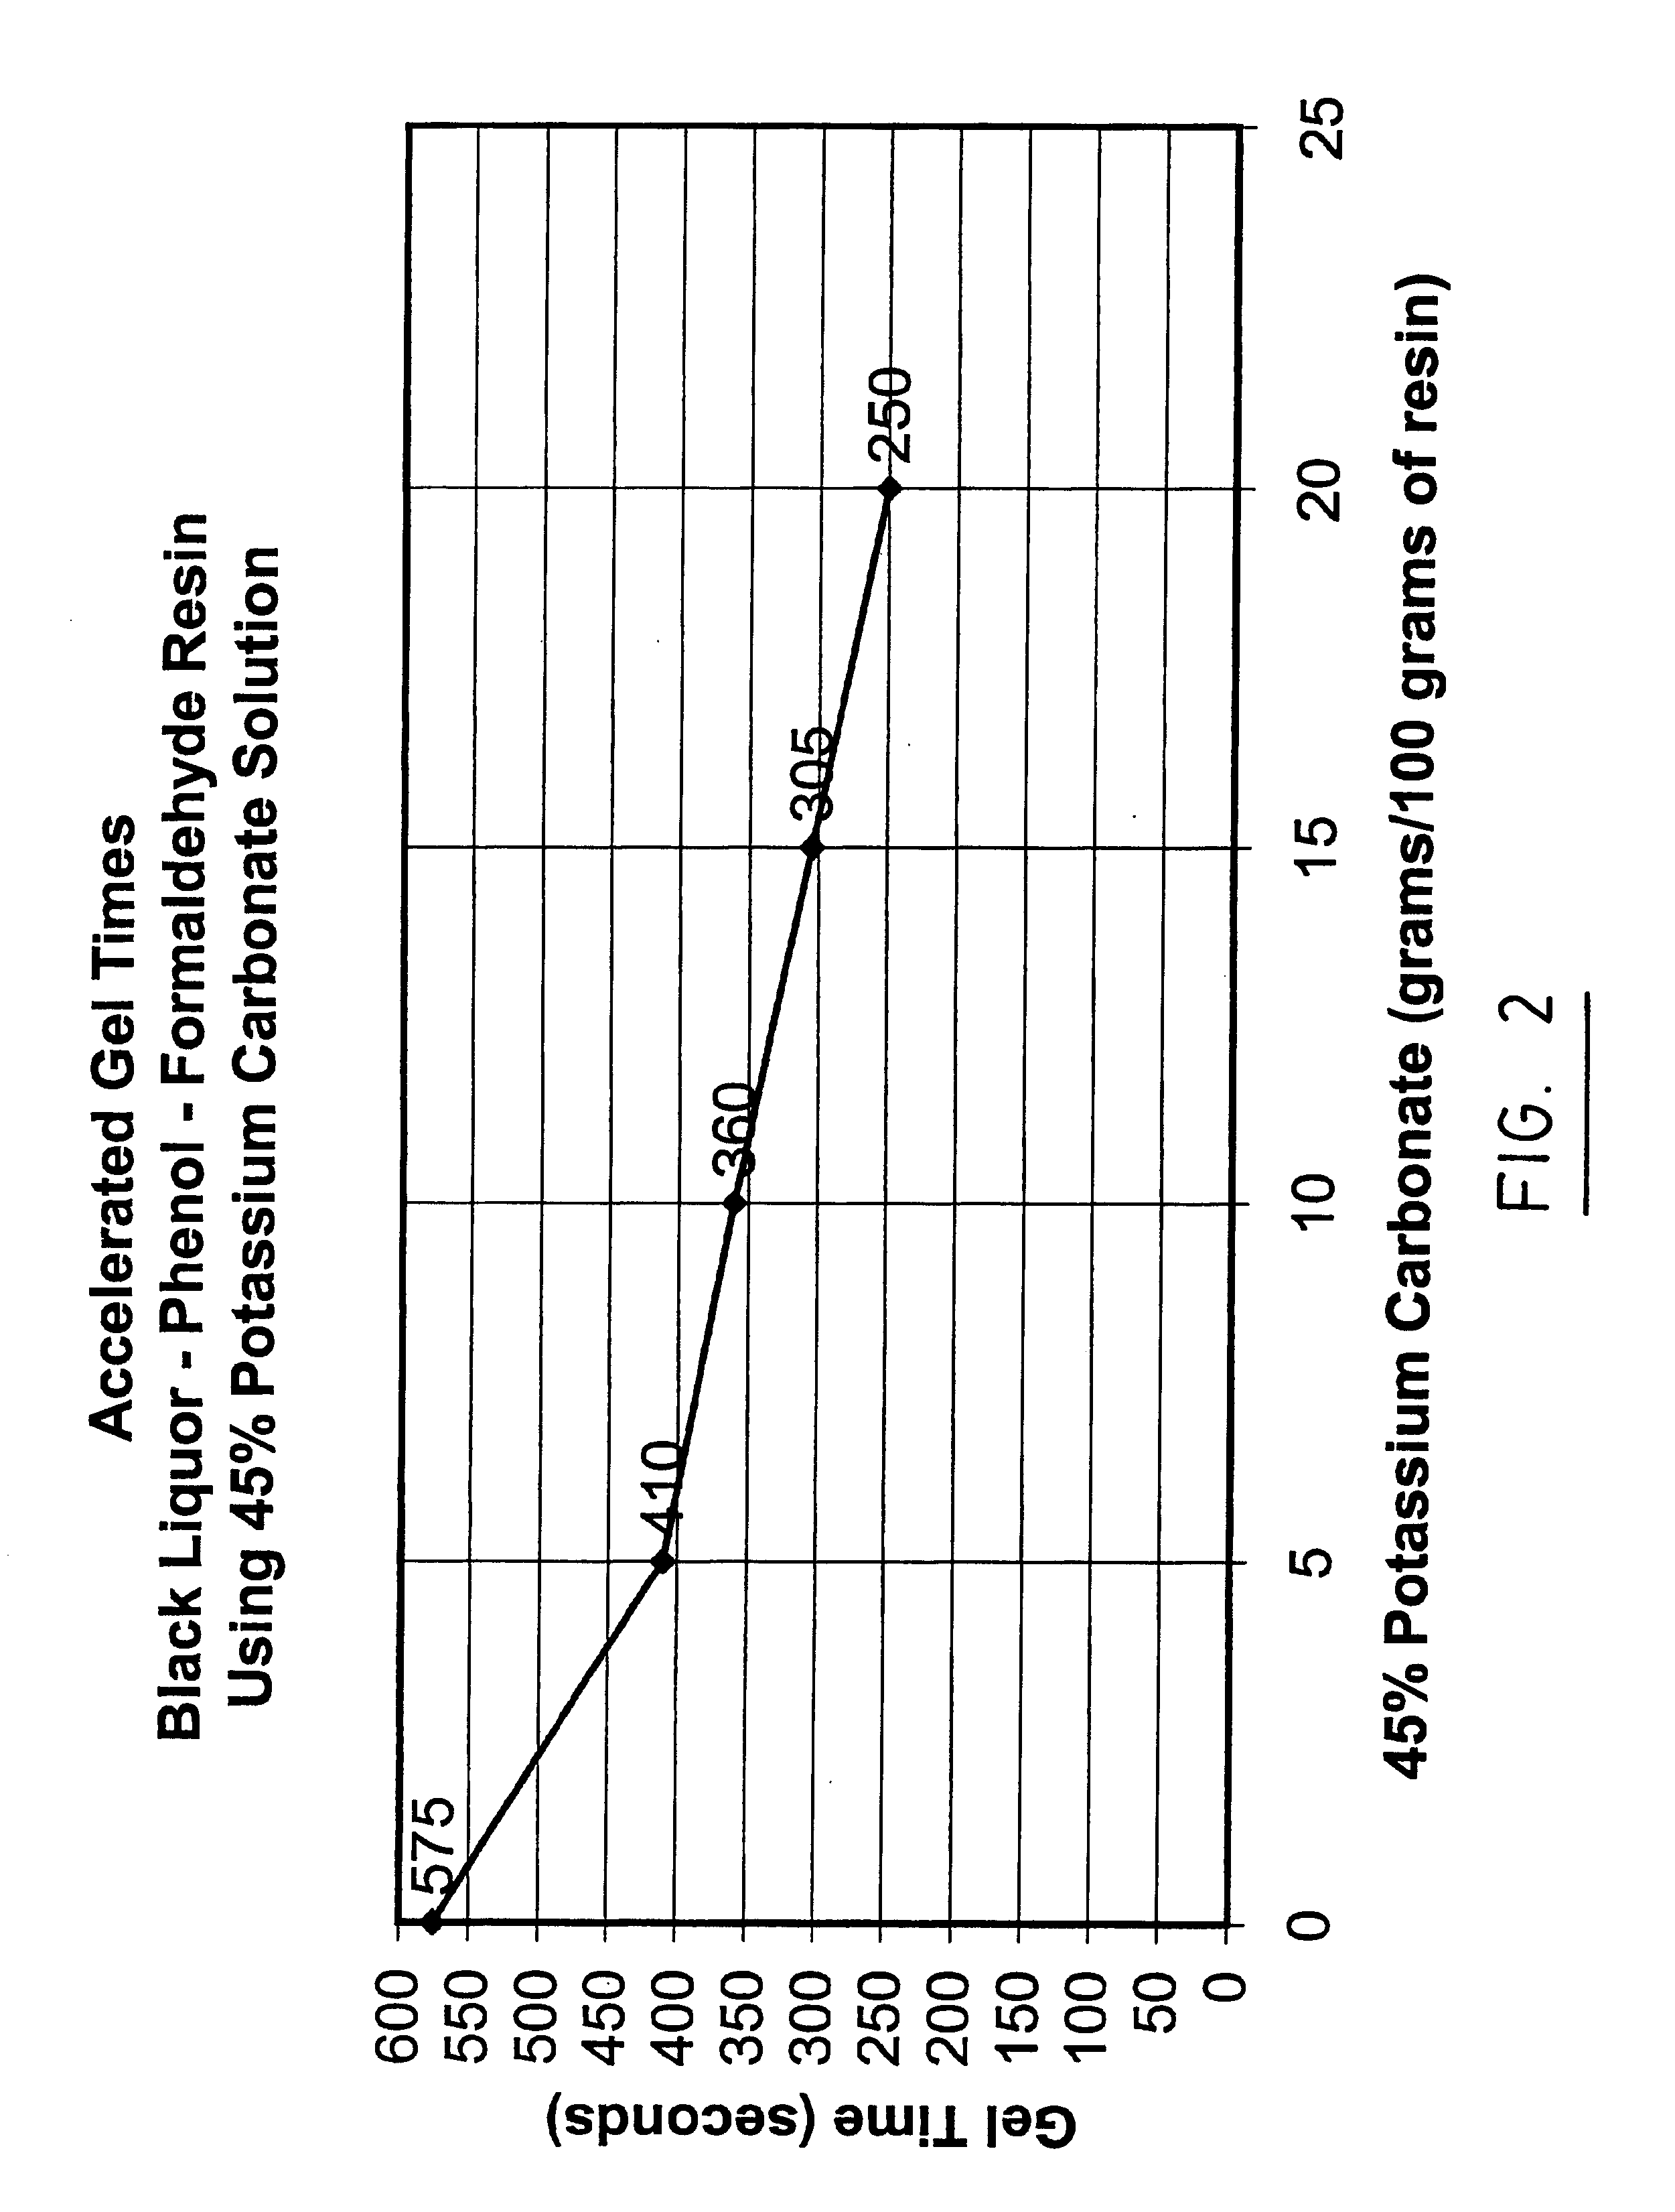 Process for preparing a black liquor-phenol formaldehyde thermoset resin